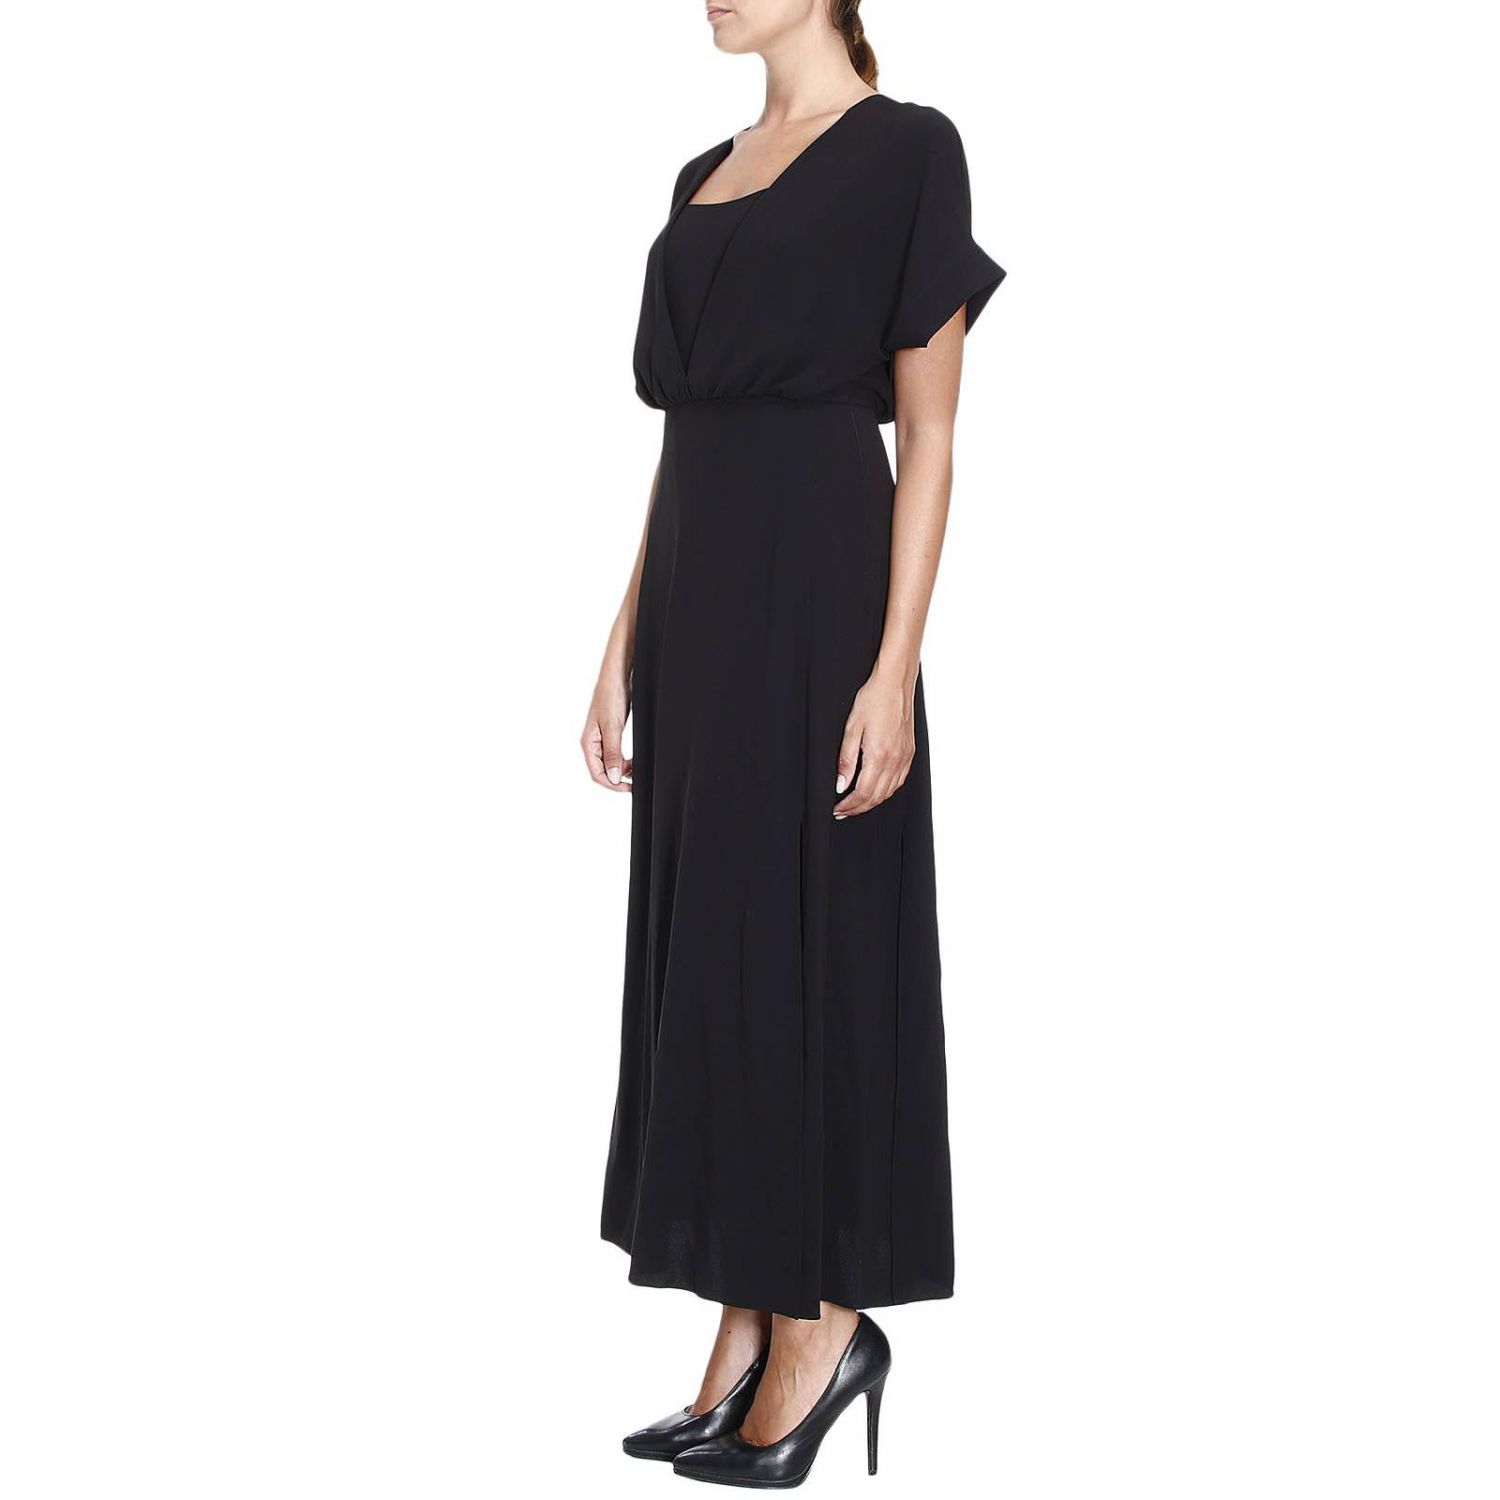 Boutique Moschino Outlet: Dress women - Black | Dress Boutique Moschino ...